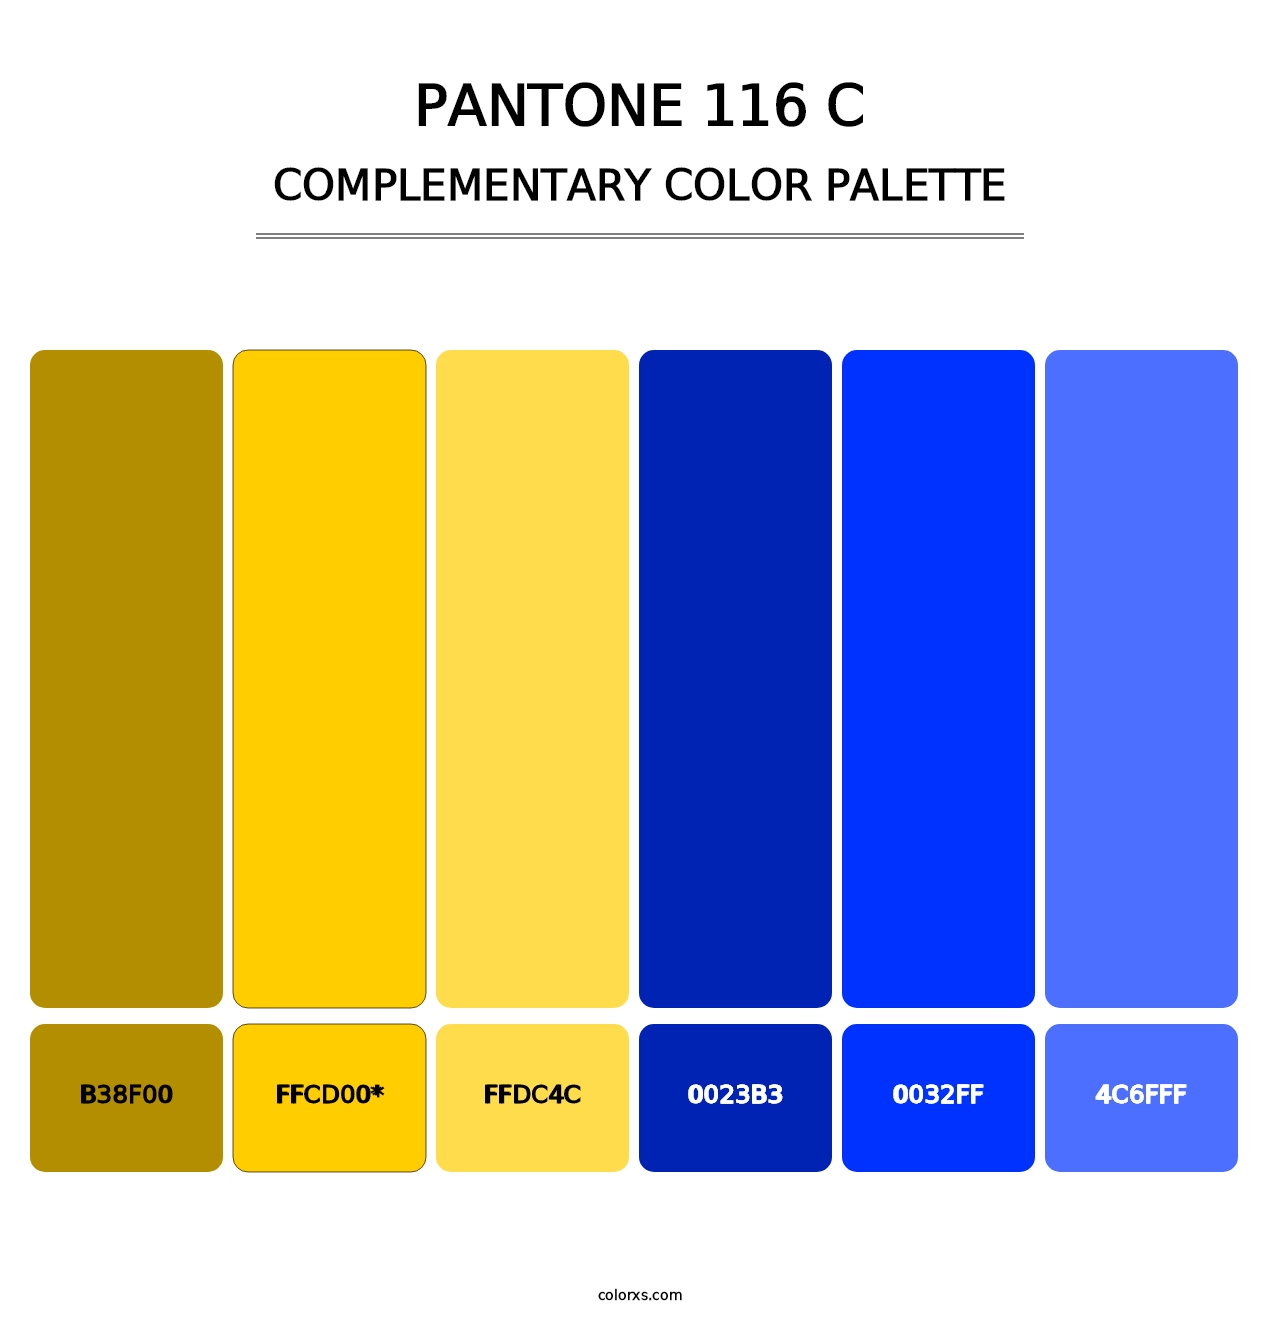 PANTONE 116 C - Complementary Color Palette